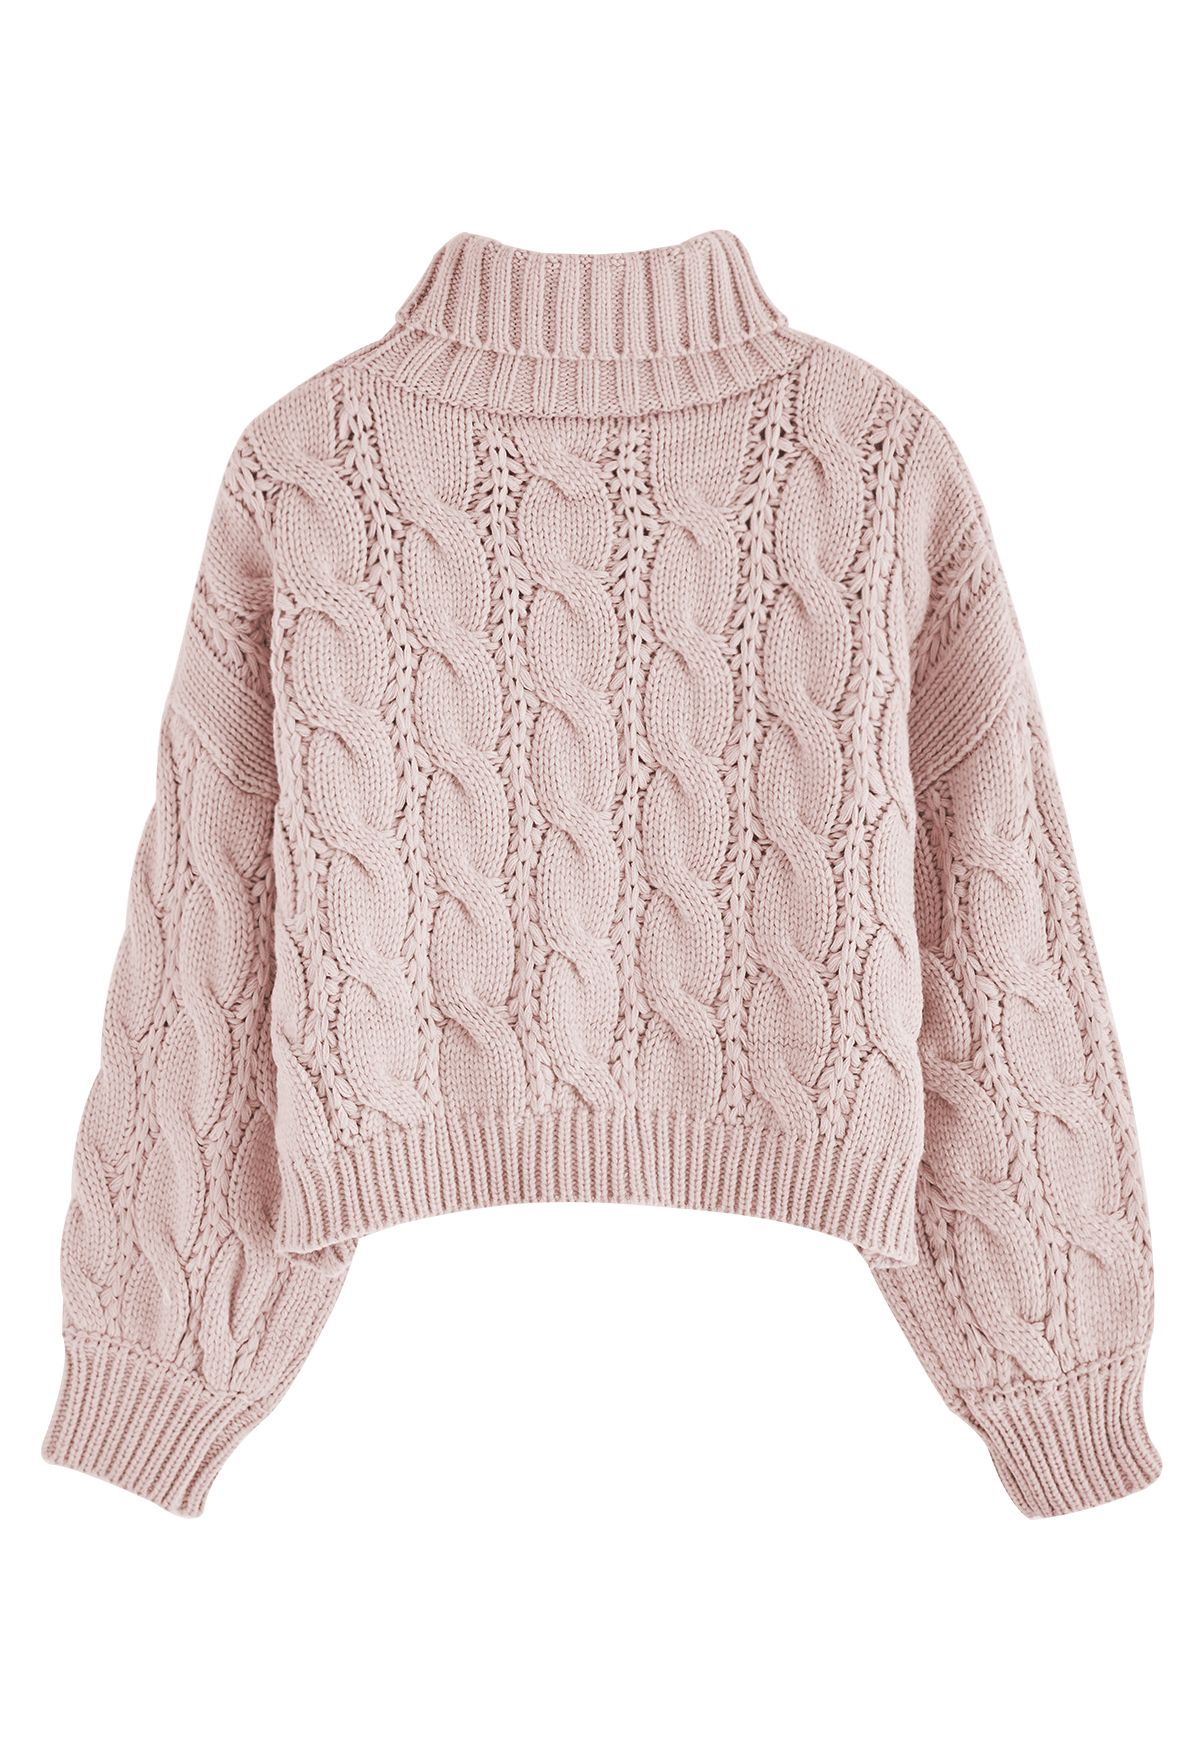 Turtleneck Braid Knit Crop Sweater in Pink - Retro, Indie and Unique ...